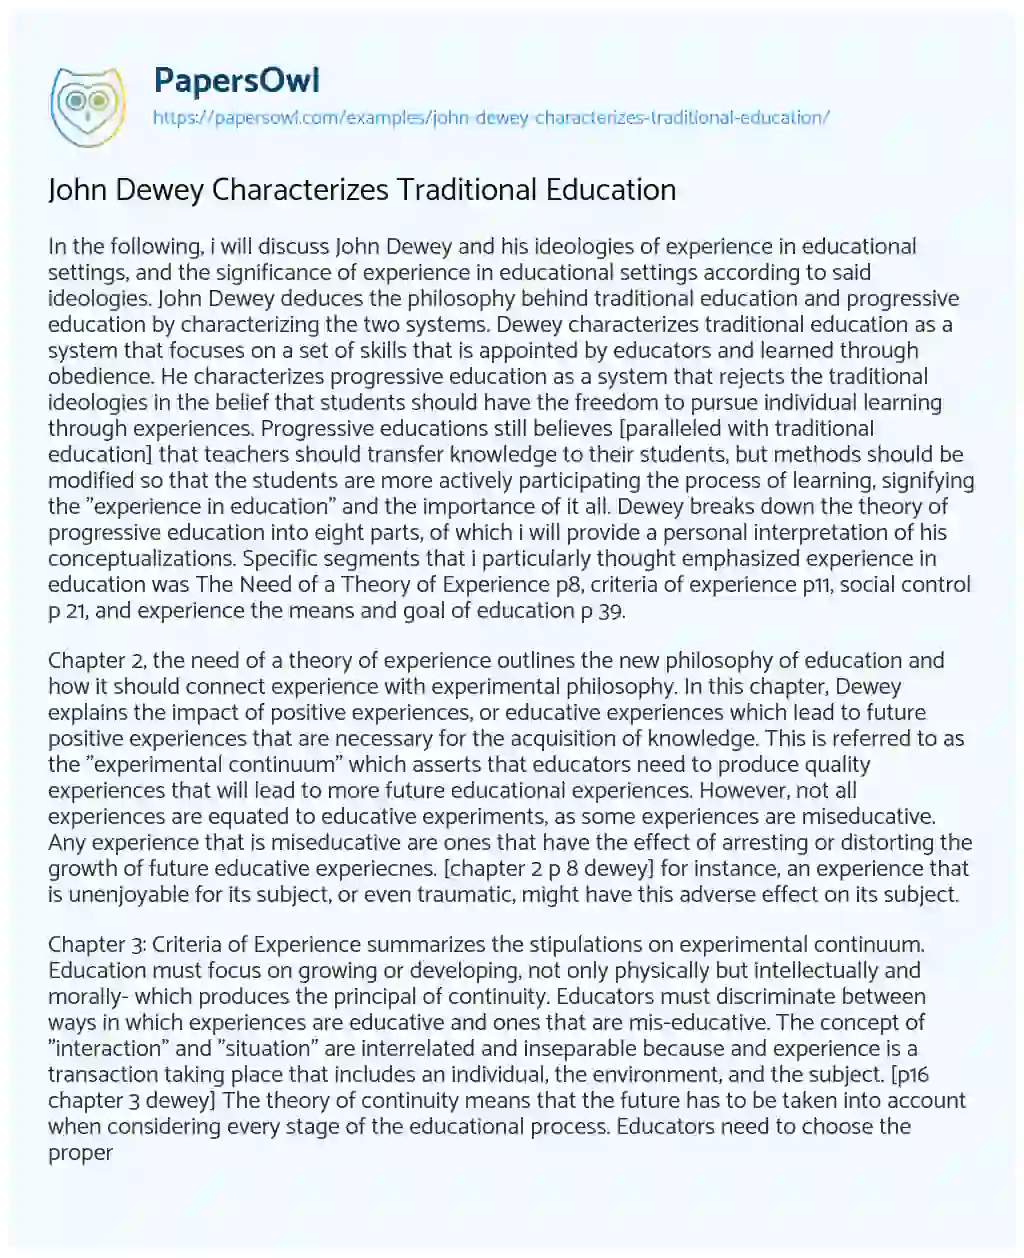 Essay on John Dewey Characterizes Traditional Education